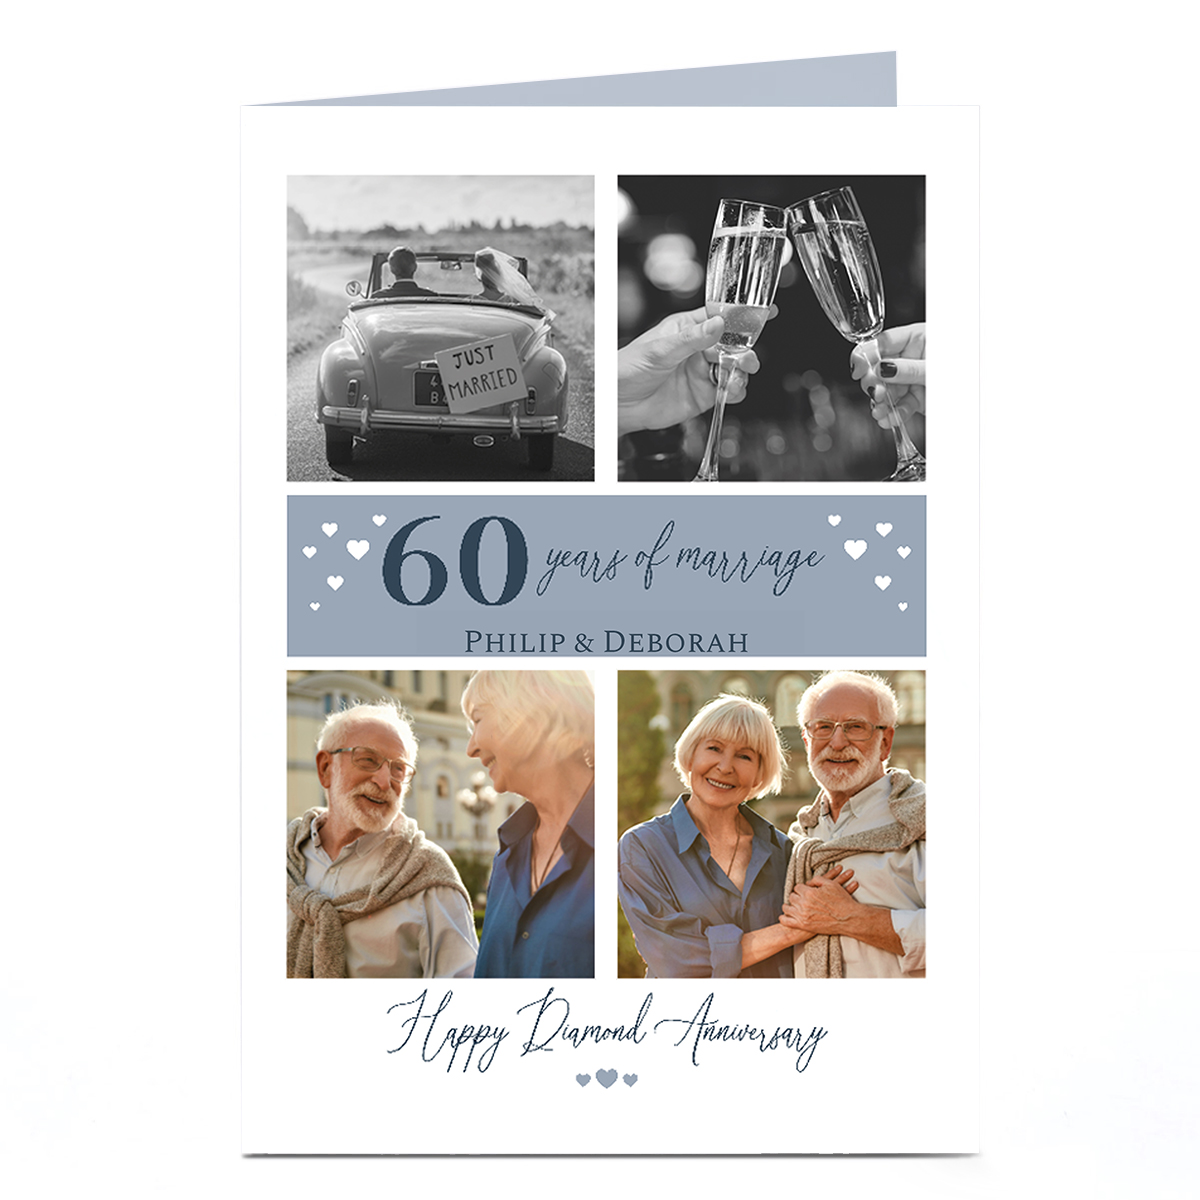 Photo 60th Anniversary Card - Happy Diamond Anniversary